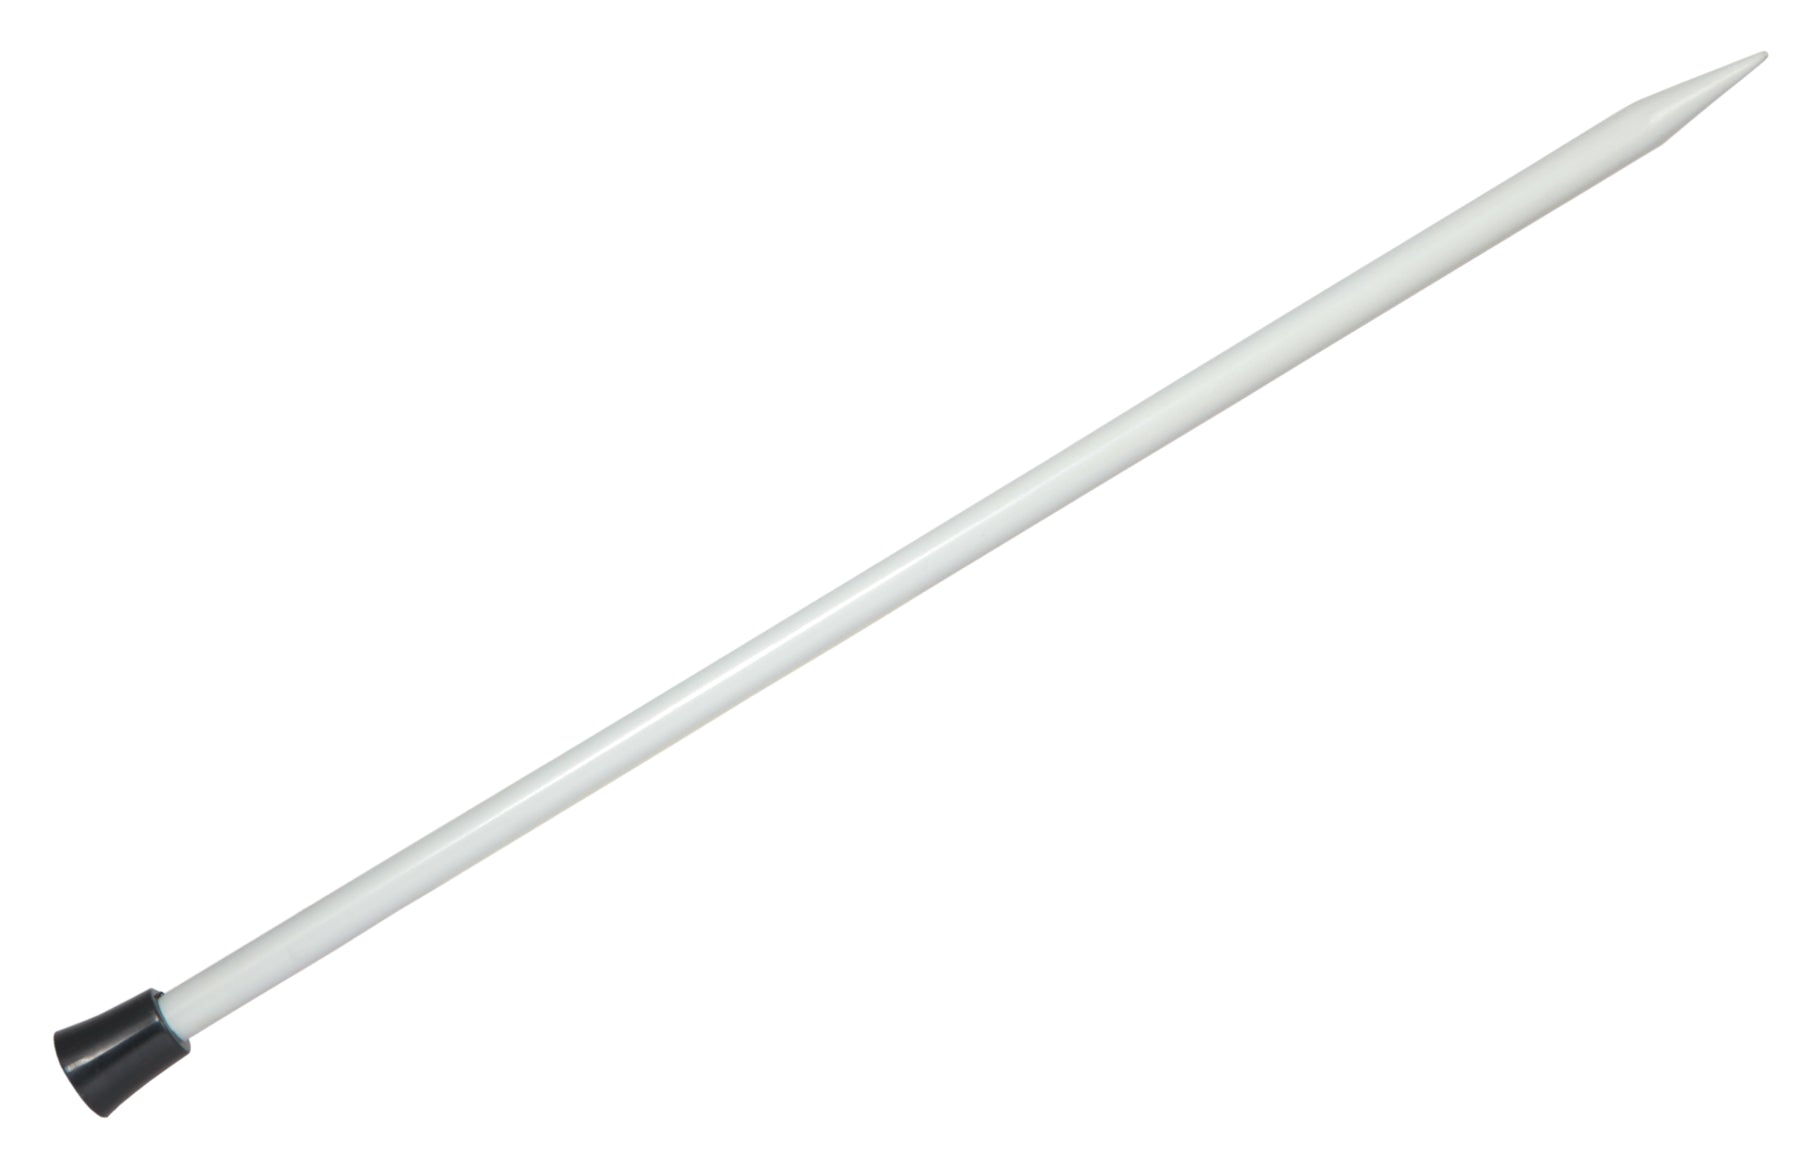 Basix Aluminium Single Pointed Knitting Needles 35 cm long